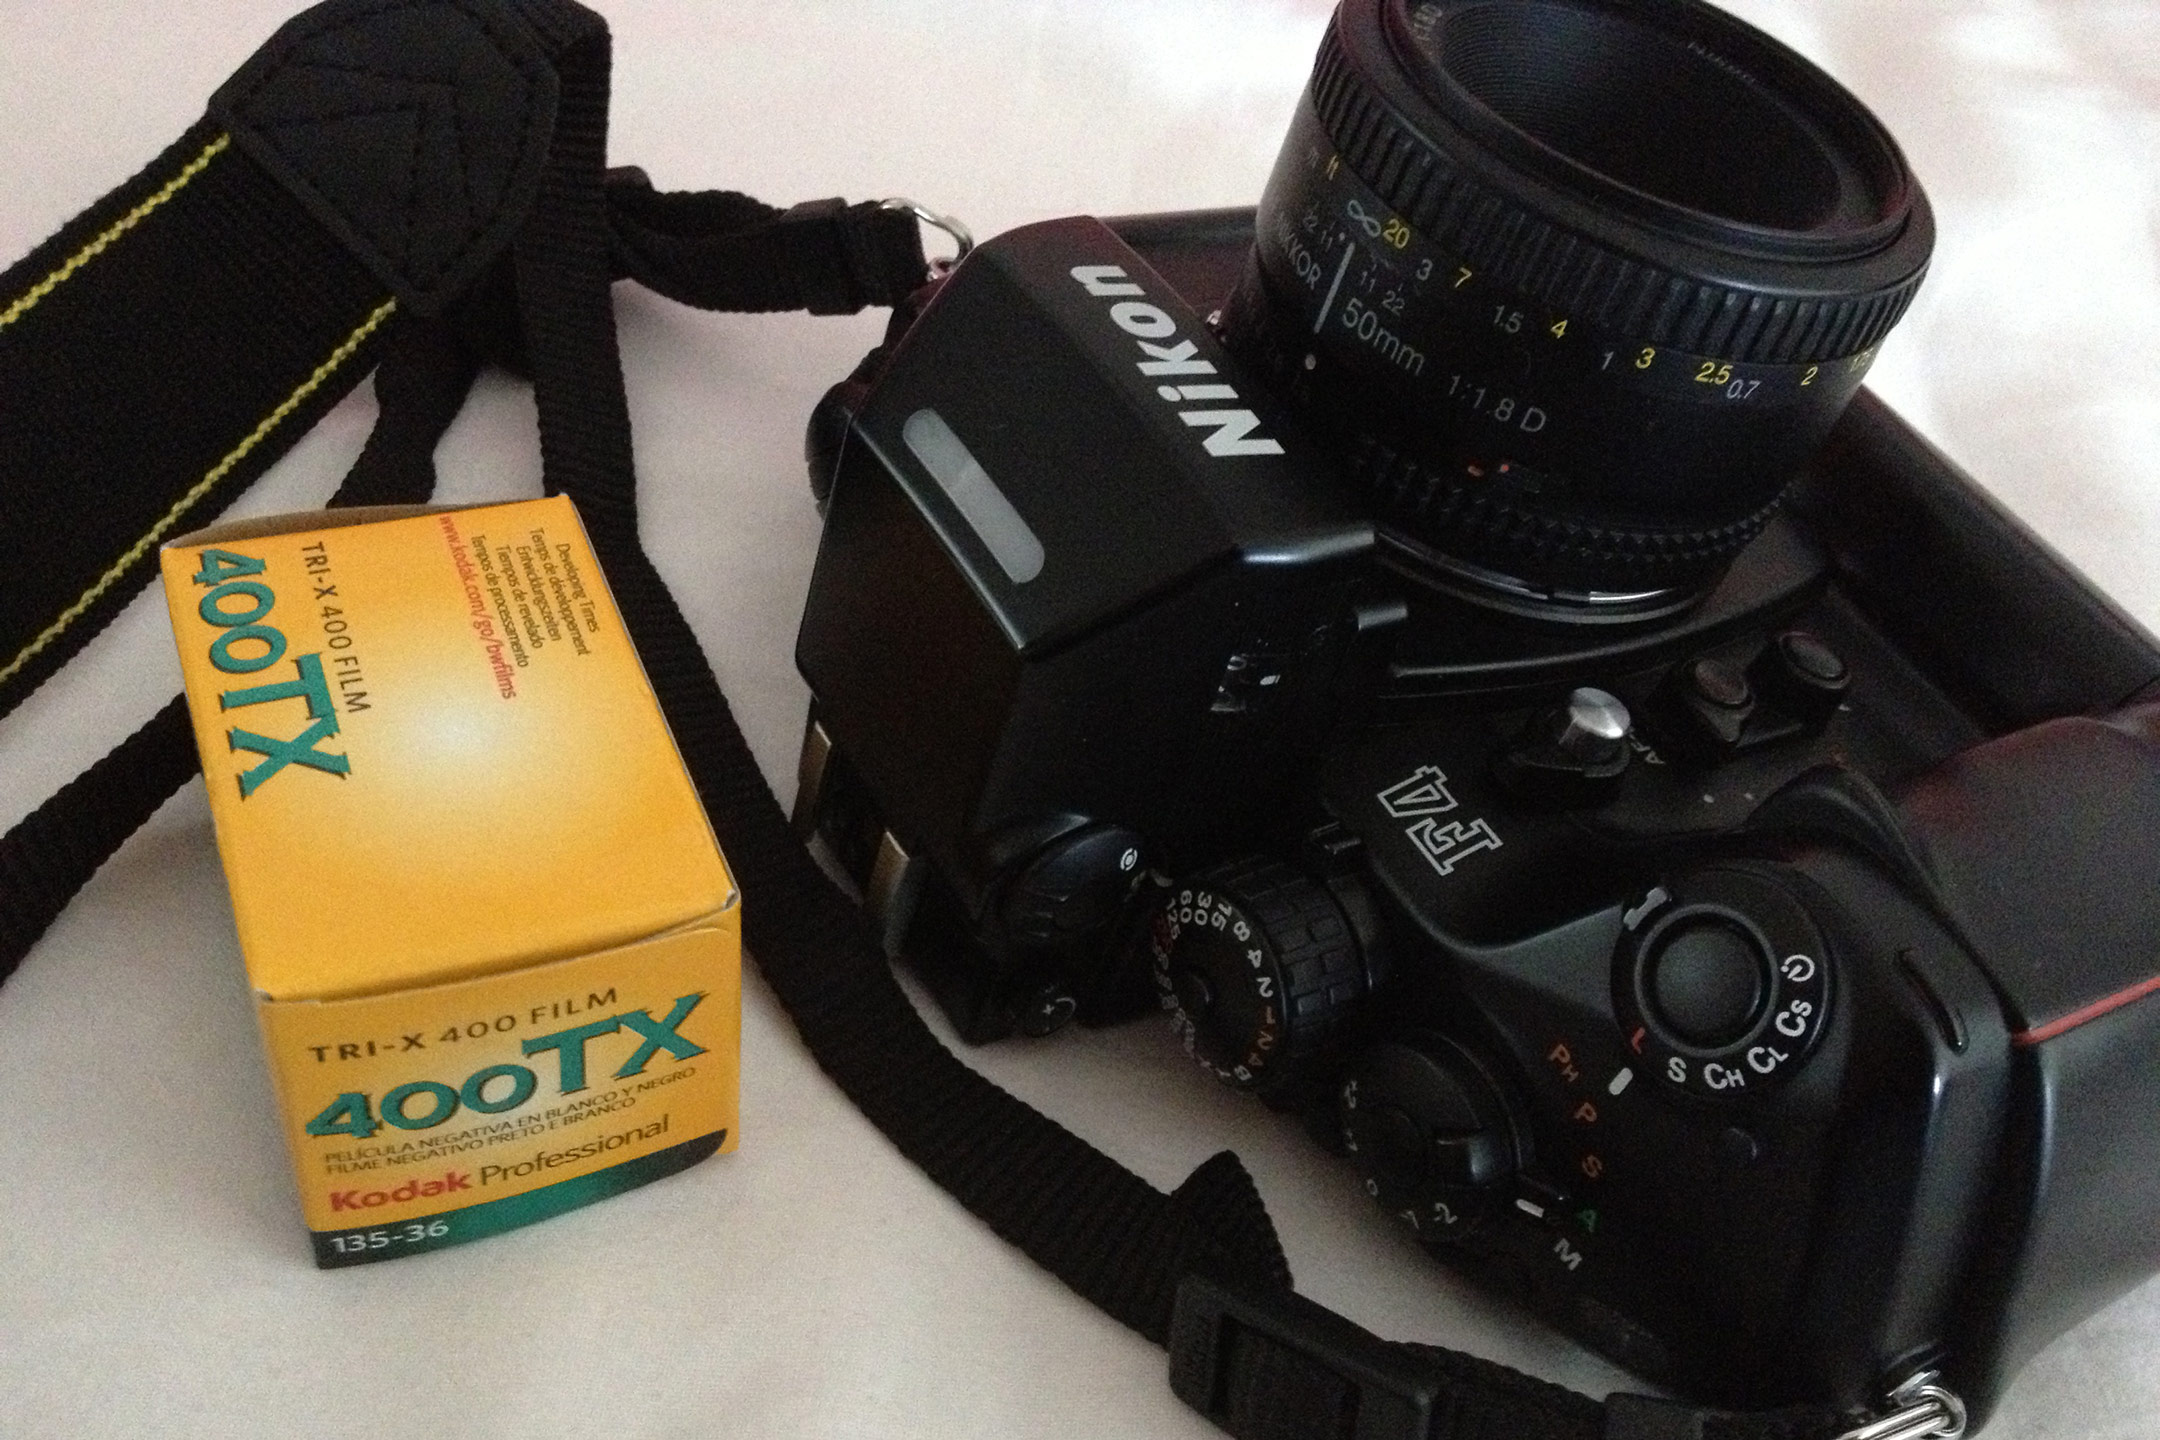 Nikon F4 and a Kodak Tri-X 400 black and white film